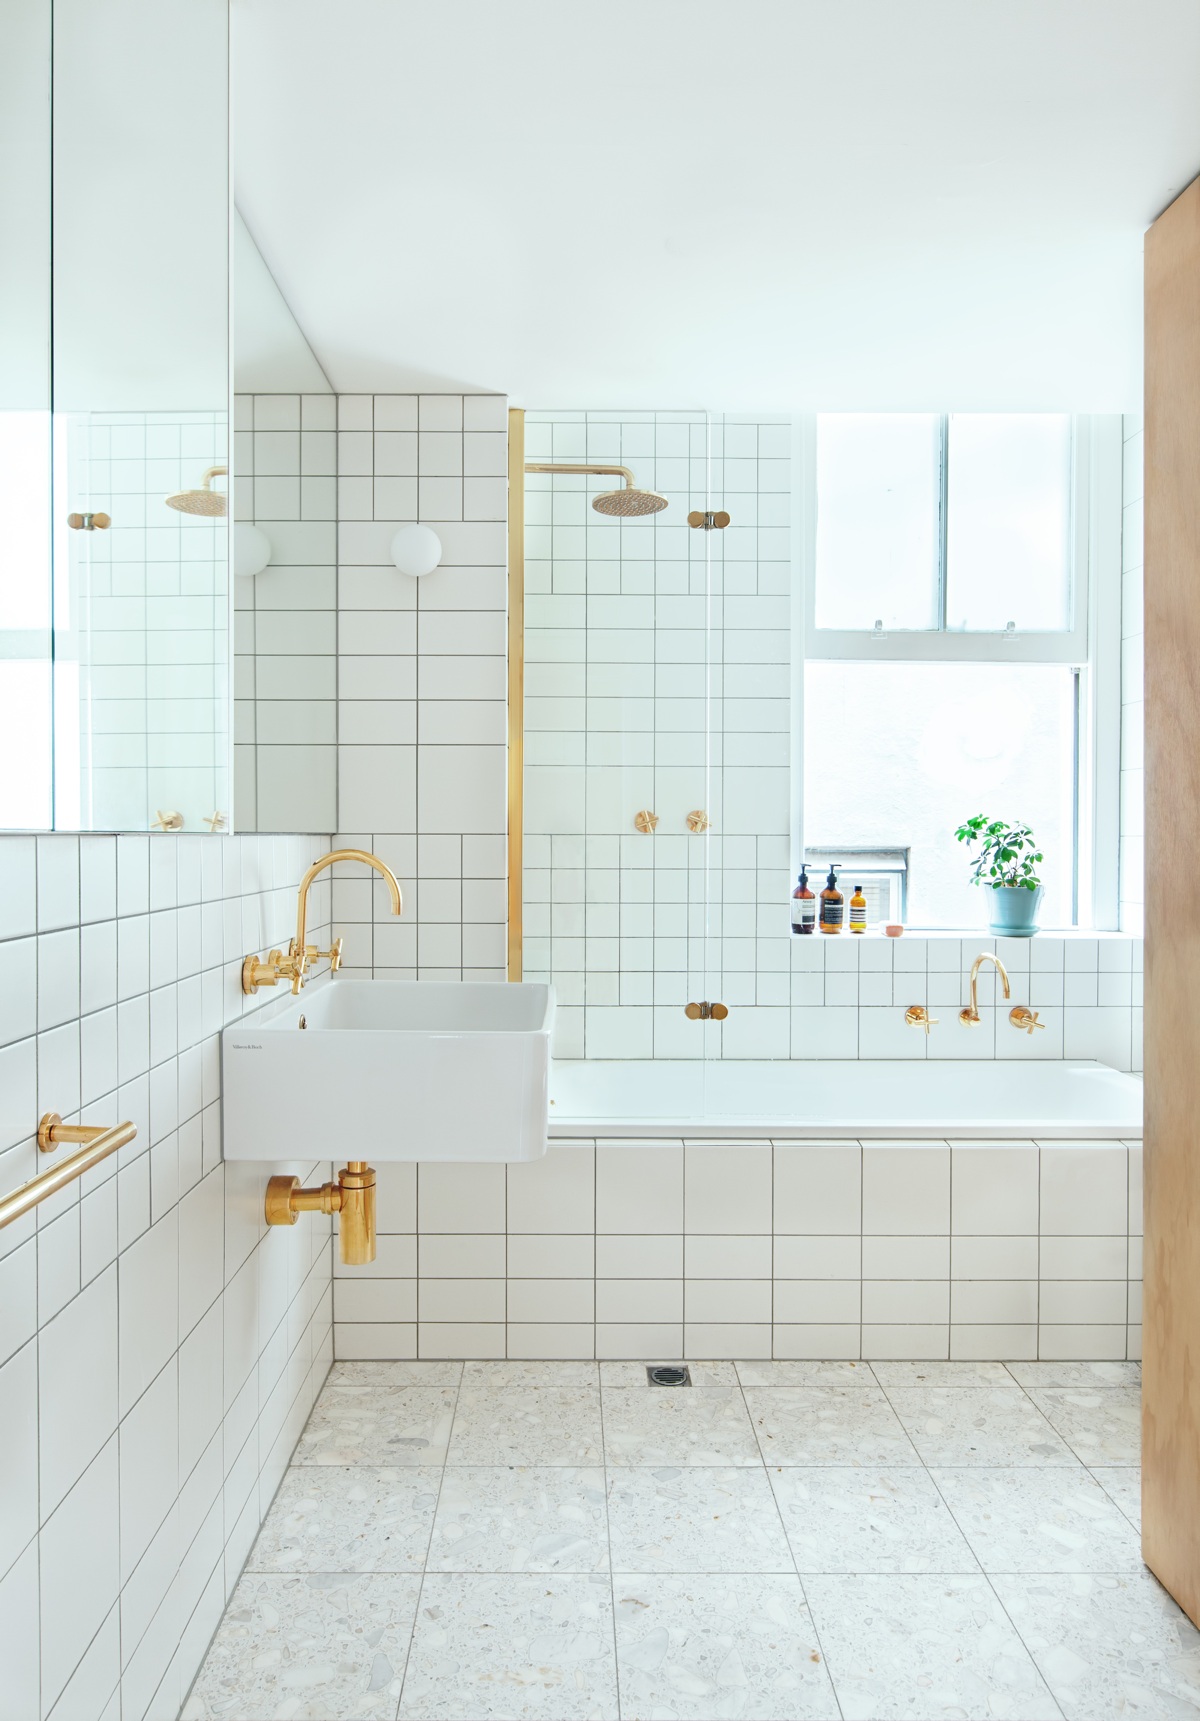 white minimalist bathroom design "width =" 1200 "height =" 1721 "srcset =" https://mileray.com/wp-content/uploads/2020/05/1588516239_801_Minimalist-Bathroom-Designs-Looks-So-Trendy-With-Backsplash-and-Wooden.jpg 1200w, https://mileray.com/wp - content / uploads / 2016/09 / Sinato-209x300.jpg 209w, https://mileray.com/wp-content/uploads/2016/09/Sinato-768x1101.jpg 768w, https://mileray.com/wp - content / uploads / 2016/09 / Sinato-714x1024.jpg 714w, https://mileray.com/wp-content/uploads/2016/09/Sinato-696x998.jpg 696w, https://mileray.com/wp - content / uploads / 2016/09 / Sinato-1068x1532.jpg 1068w, https://mileray.com/wp-content/uploads/2016/09/Sinato-293x420.jpg 293w "sizes =" (maximum width: 1200px) 100vw , 1200px